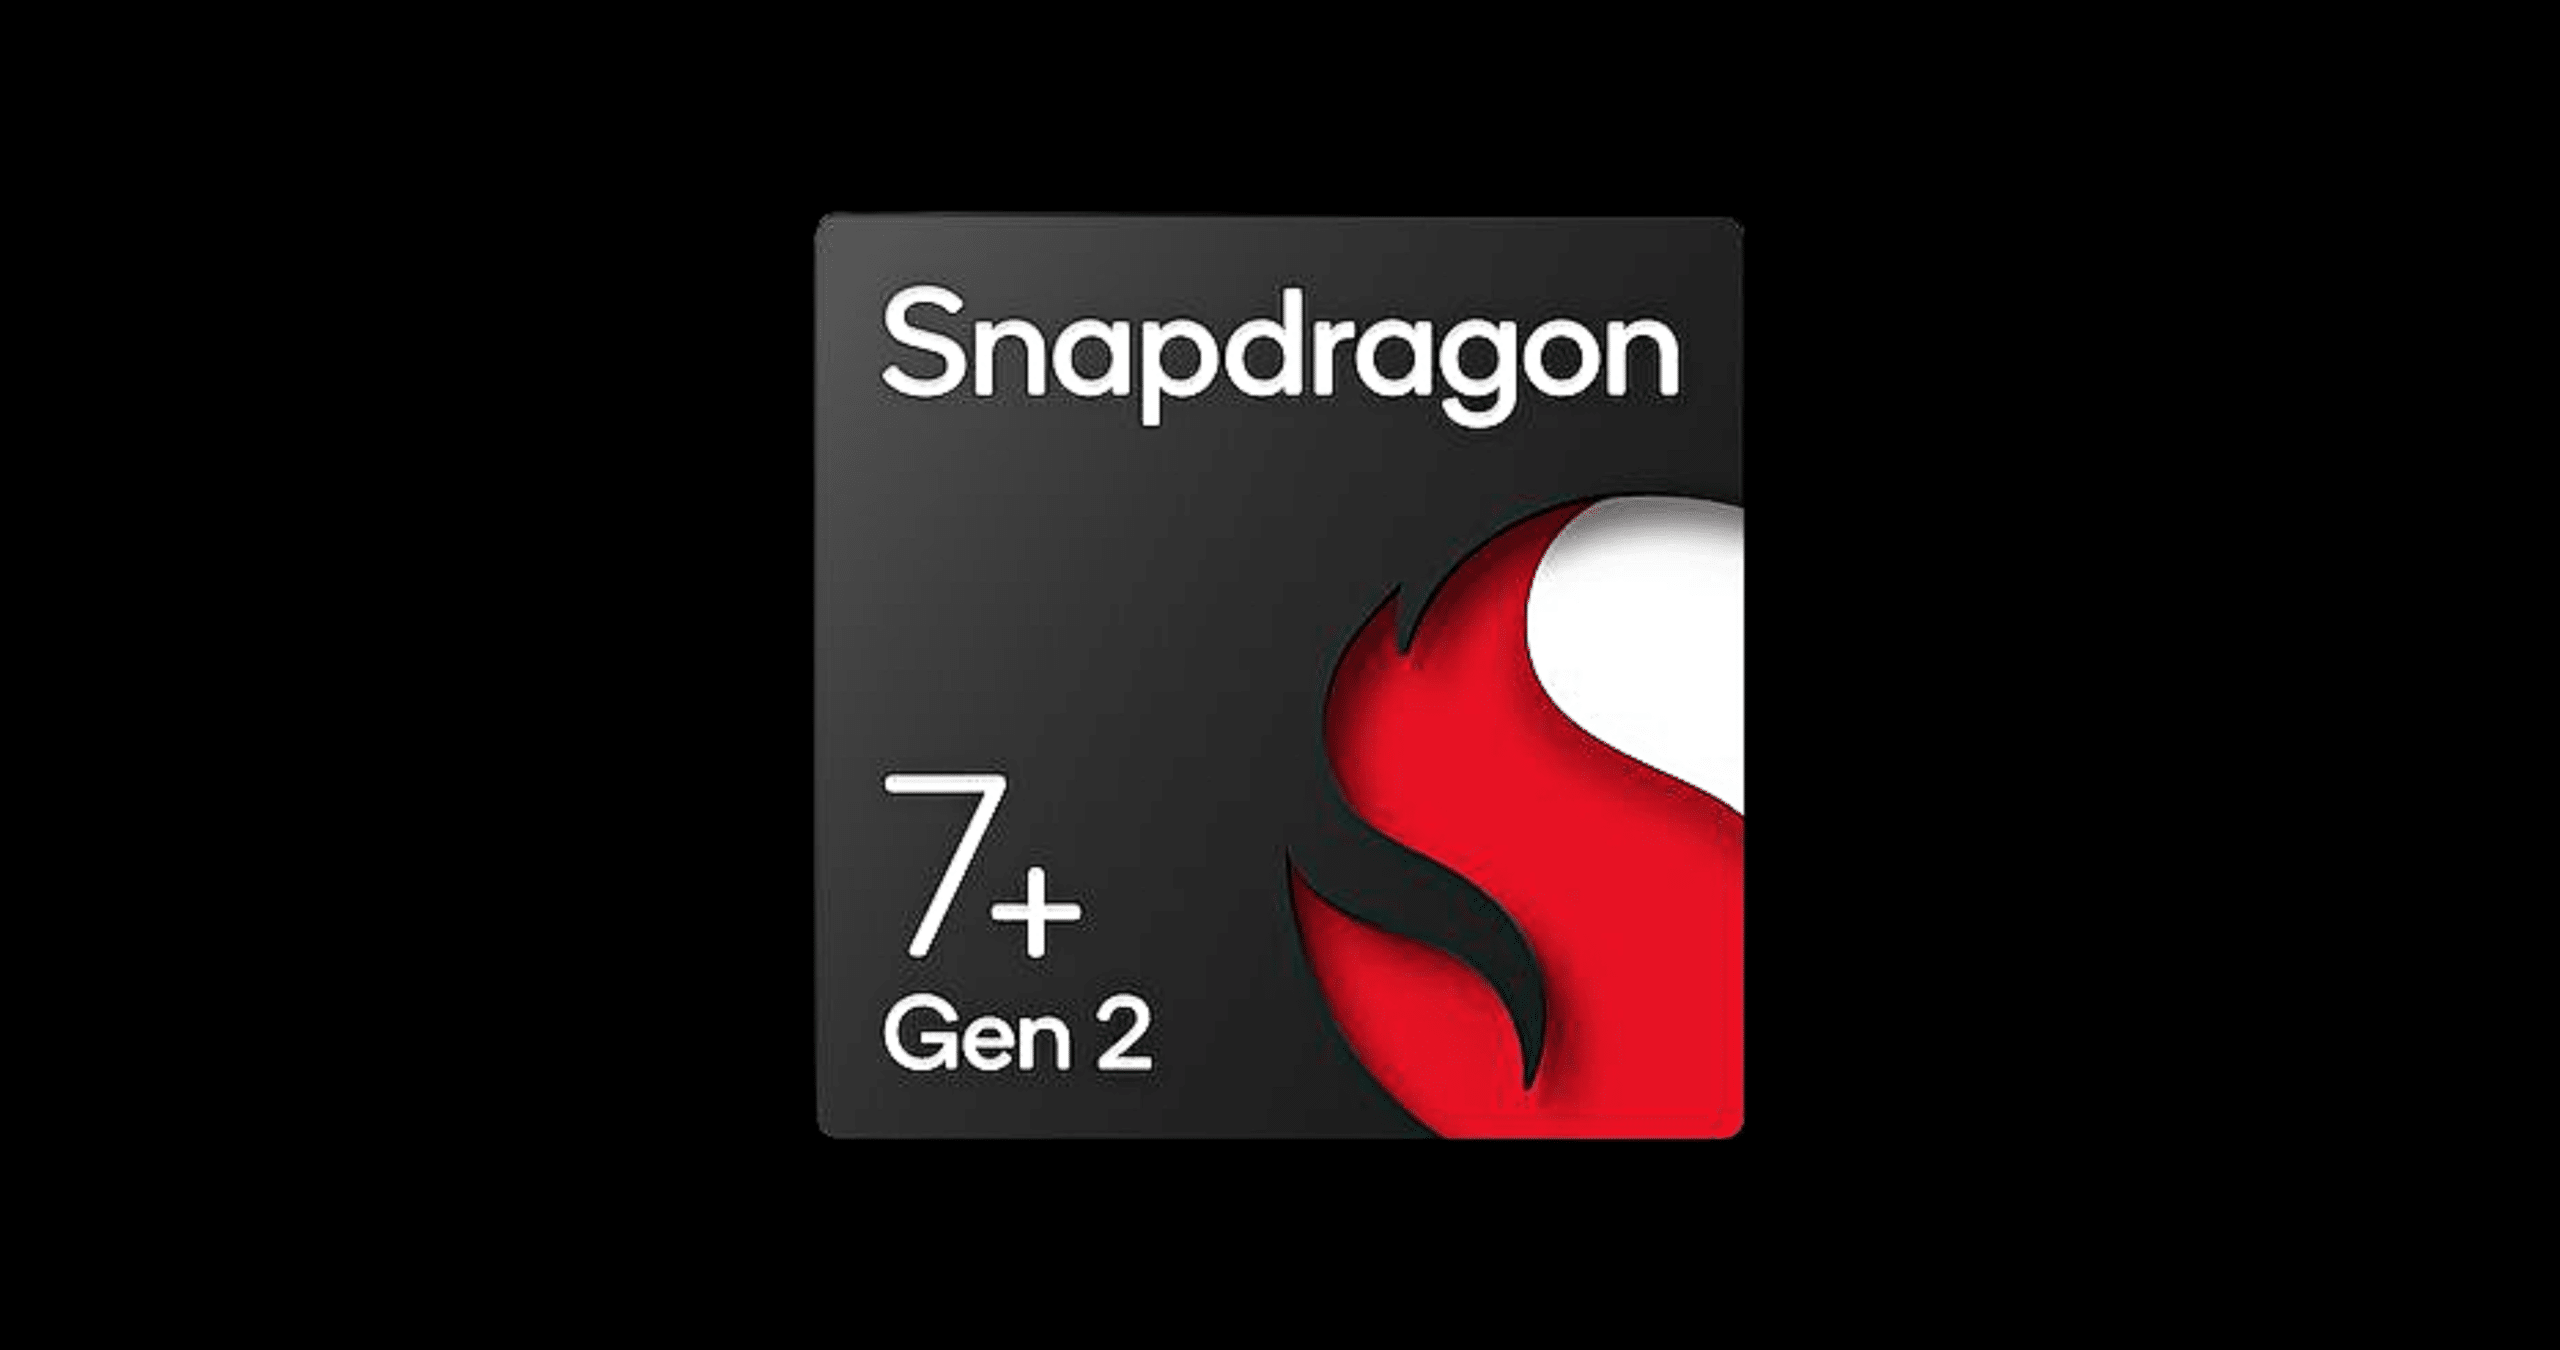 Qualcomm Snapdragon 7+ Gen 2 launched